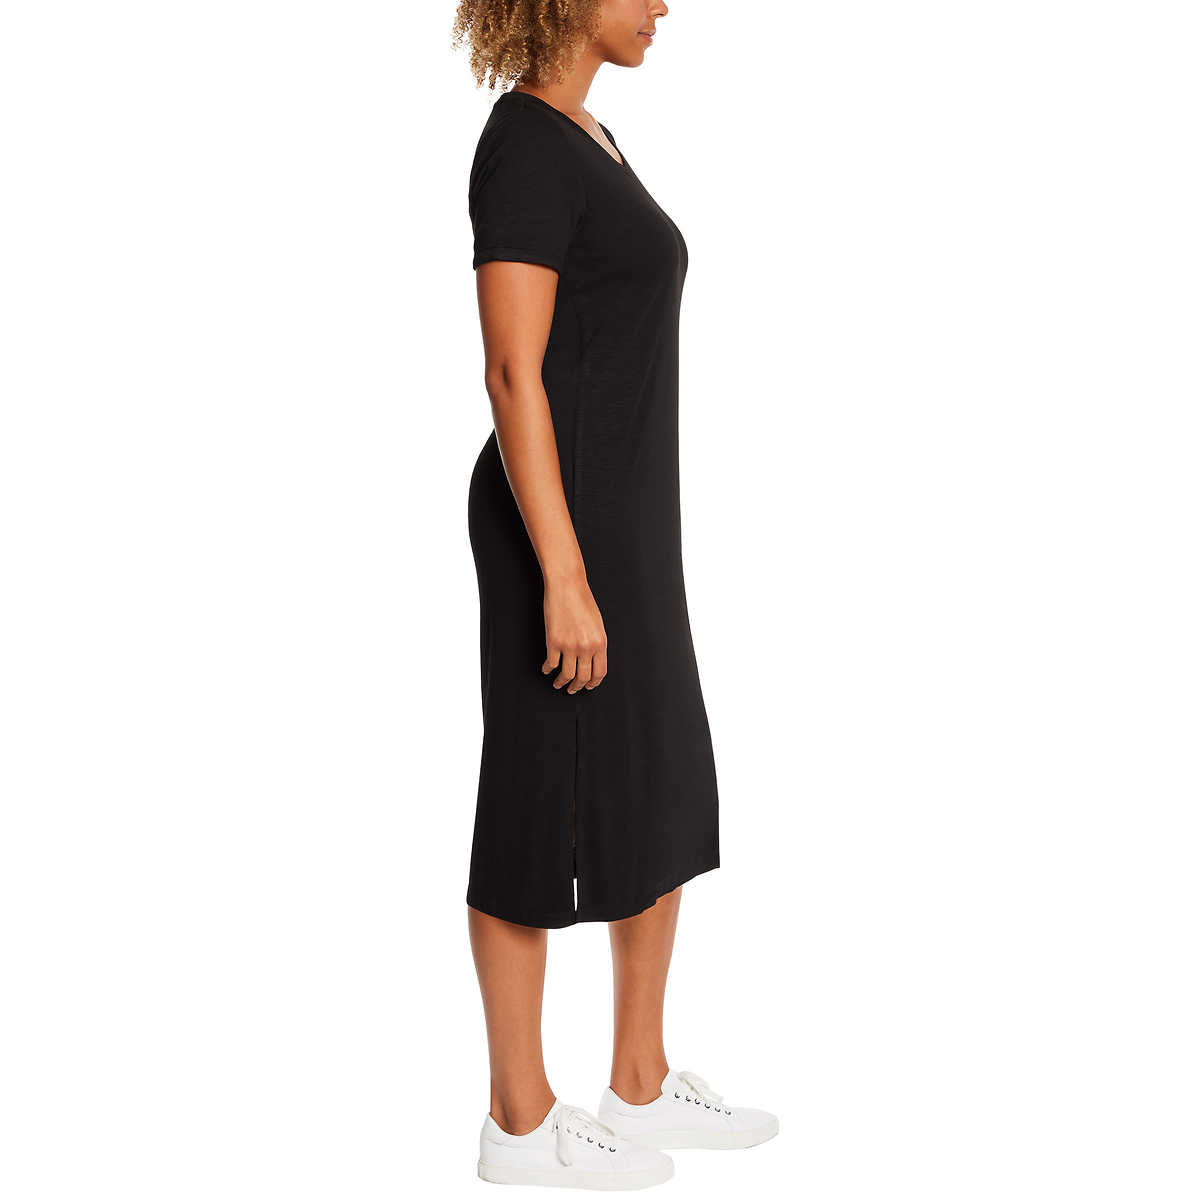 Jessica Simpson Women's Soft Jersey Side Slits T-Shirt Midi Dress